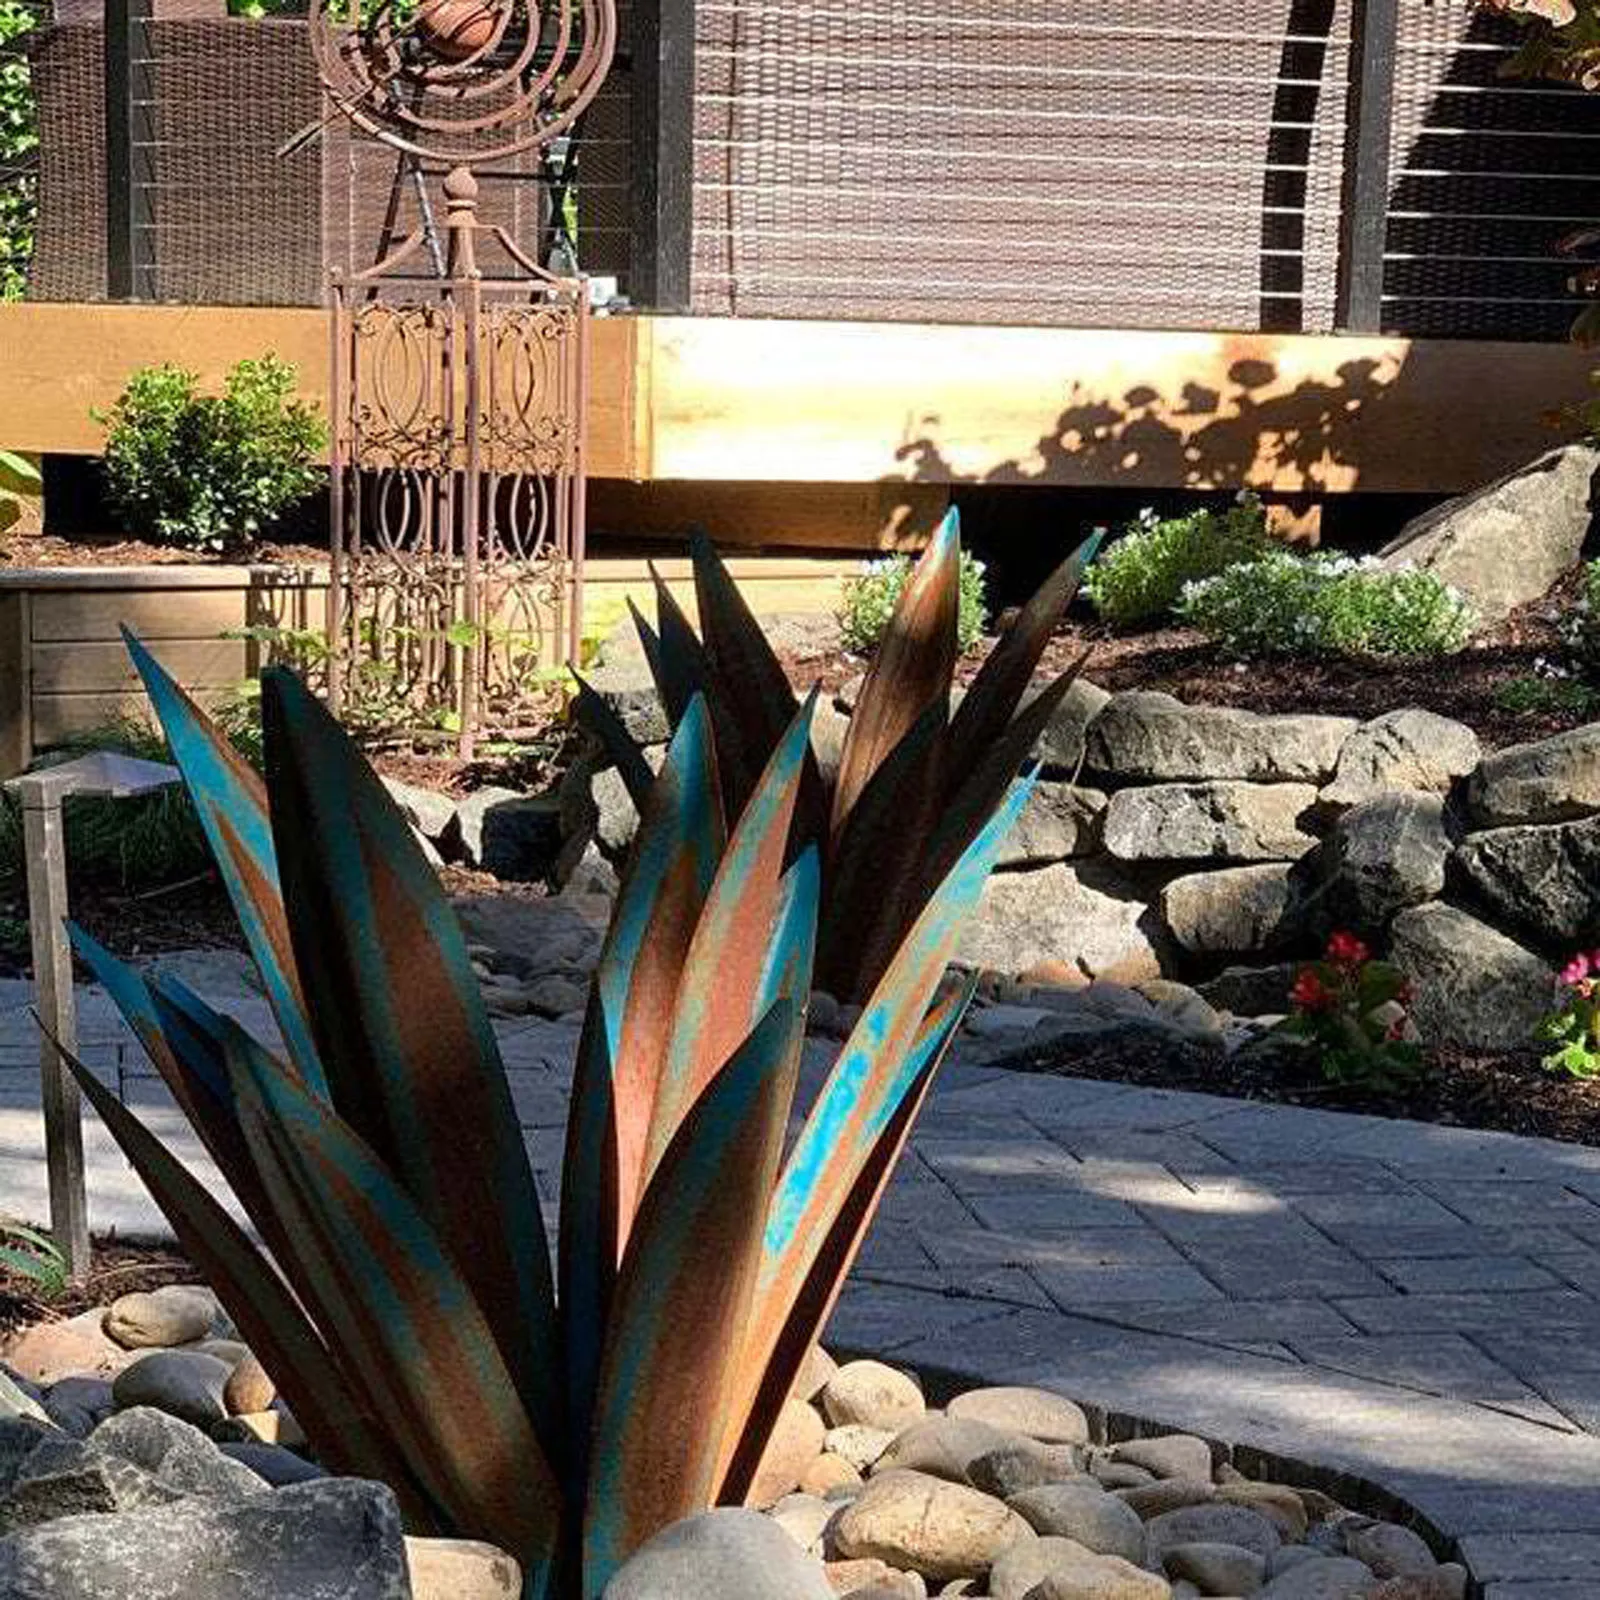 Details about  / 35CM Agave DIY Metal Art Tequila Rustic Sculpture Garden Yard 9 Leave Home Decor